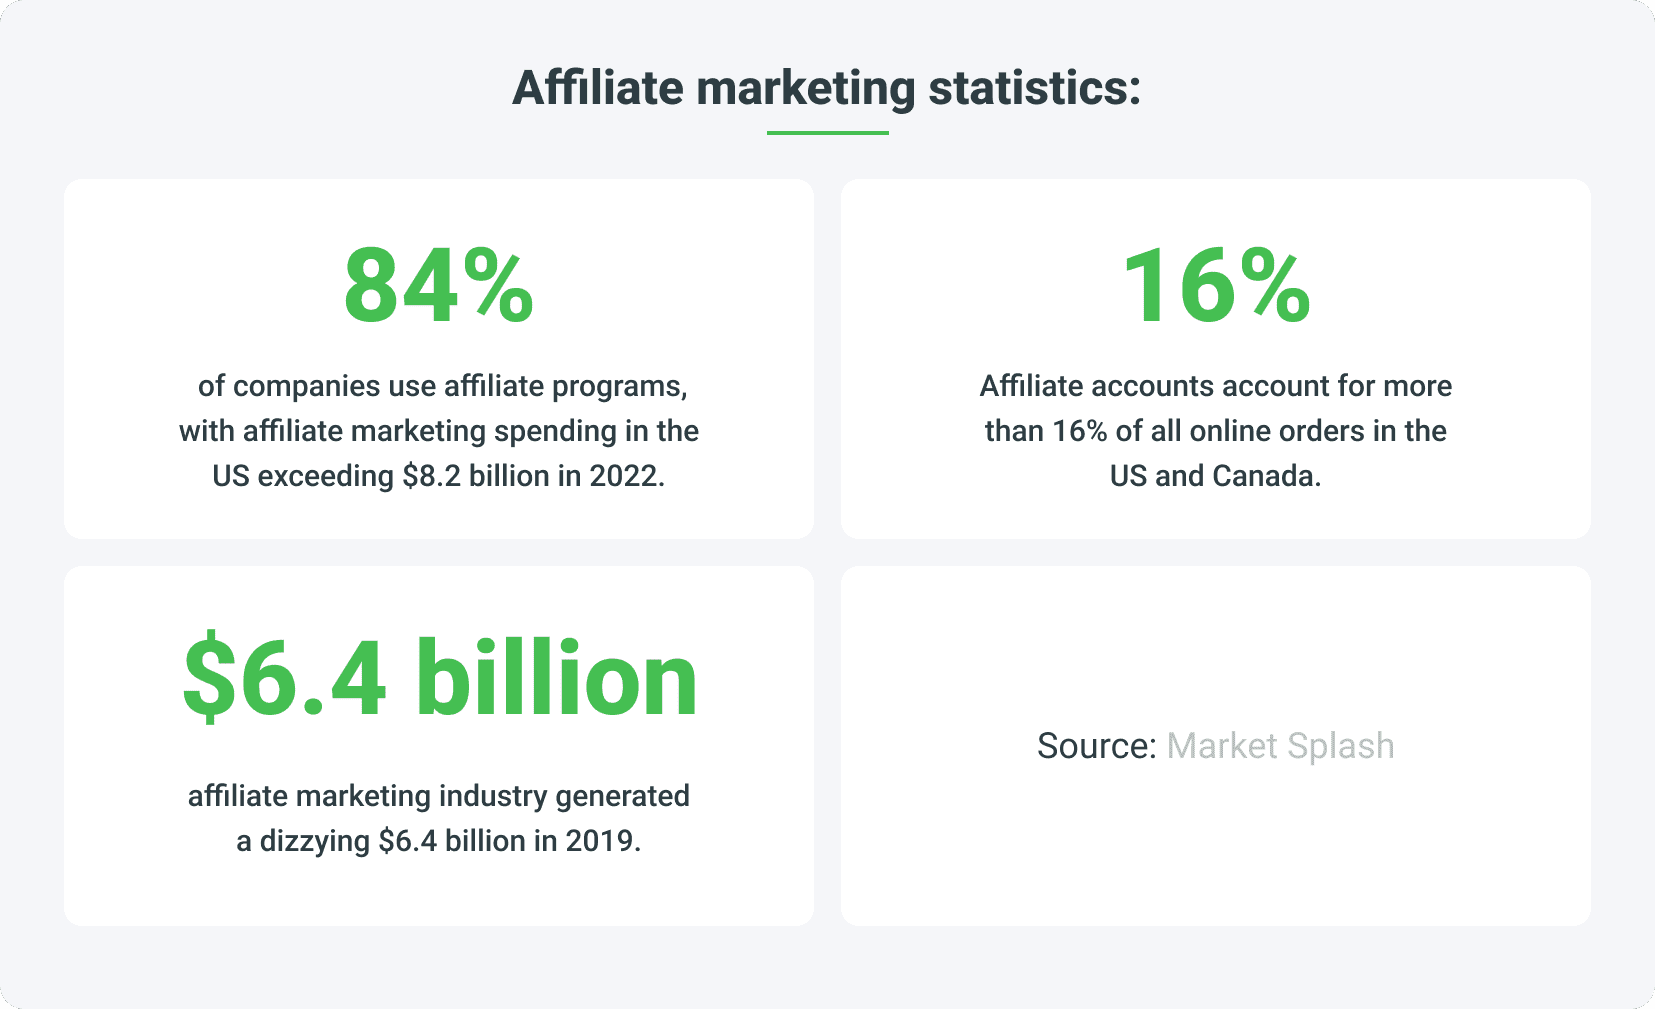 Affiliate marketing statistics from 2022